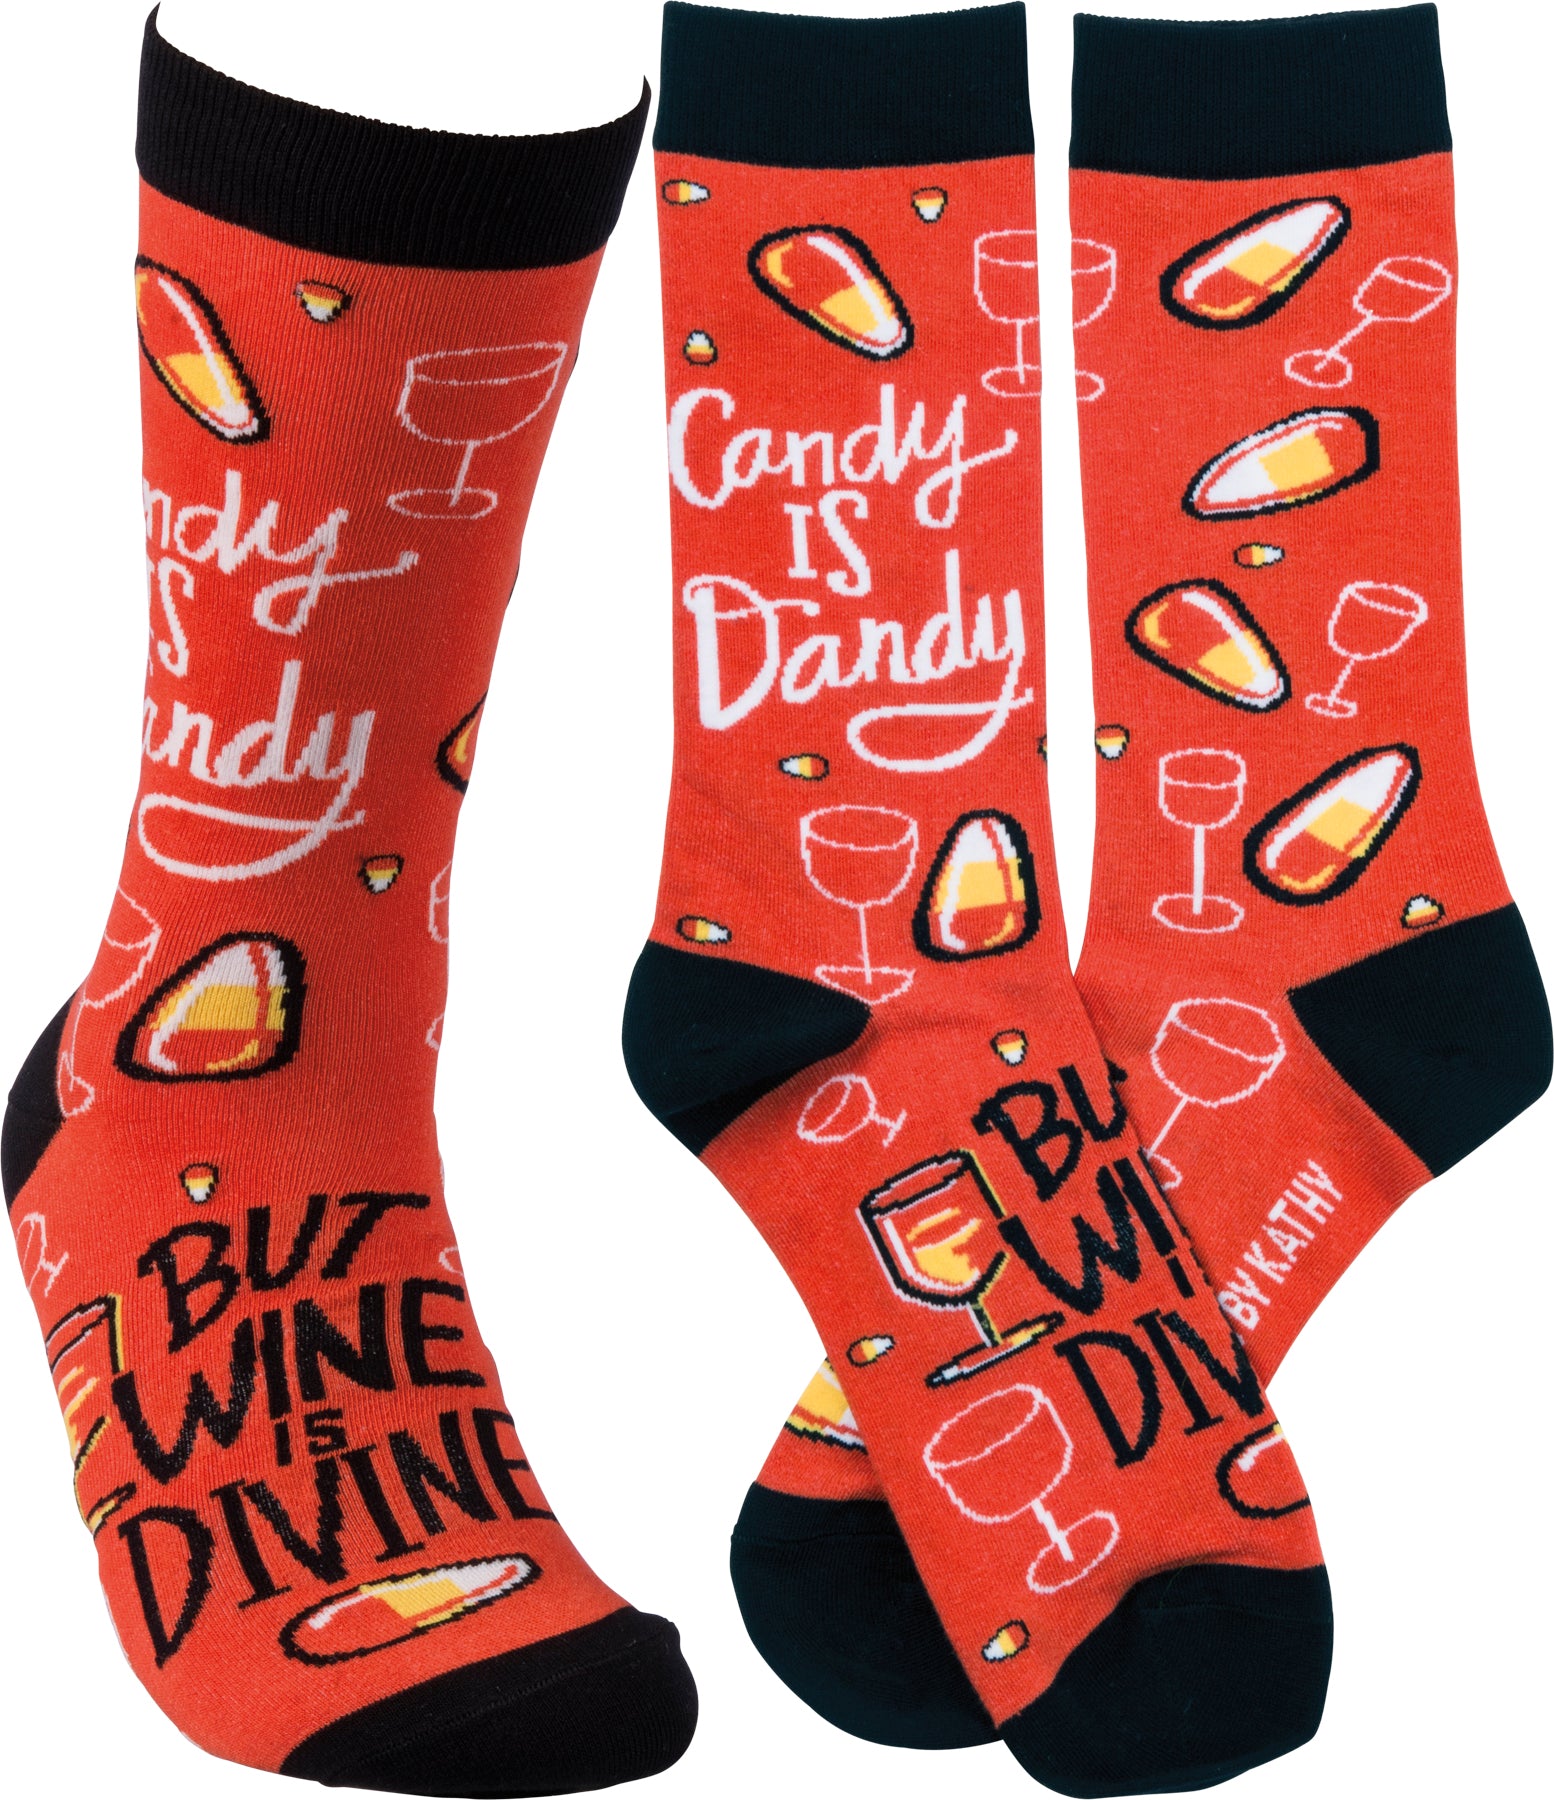 Socks-Candy